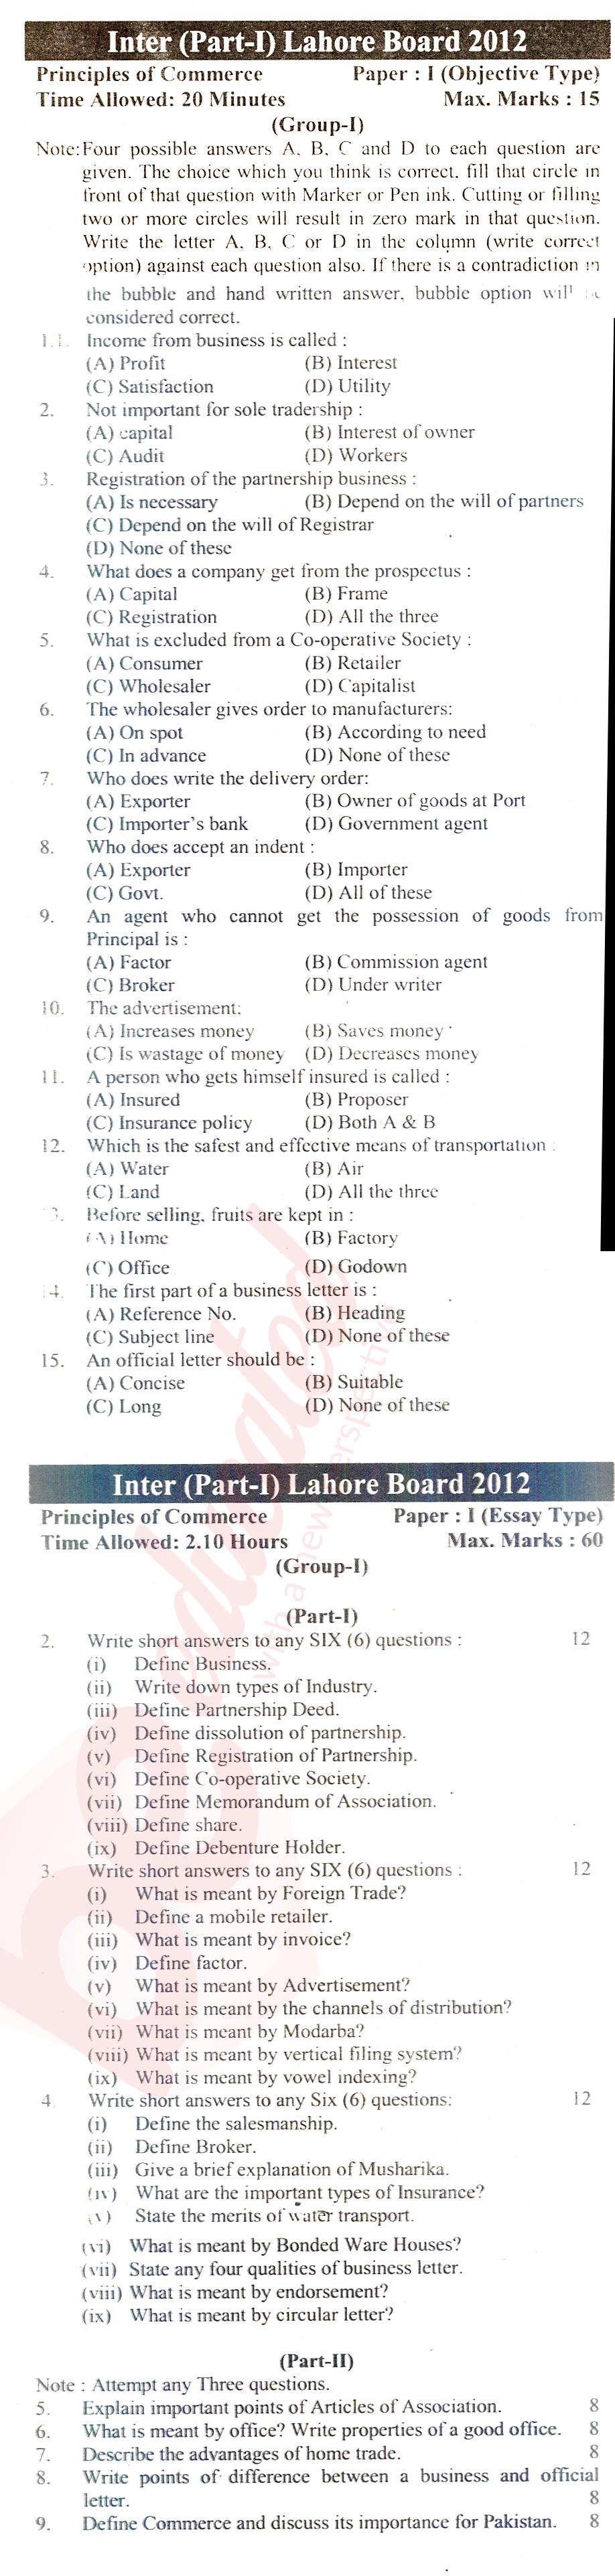 Principles of Commerce ICOM Part 1 Past Paper Group 1 BISE Lahore 2012